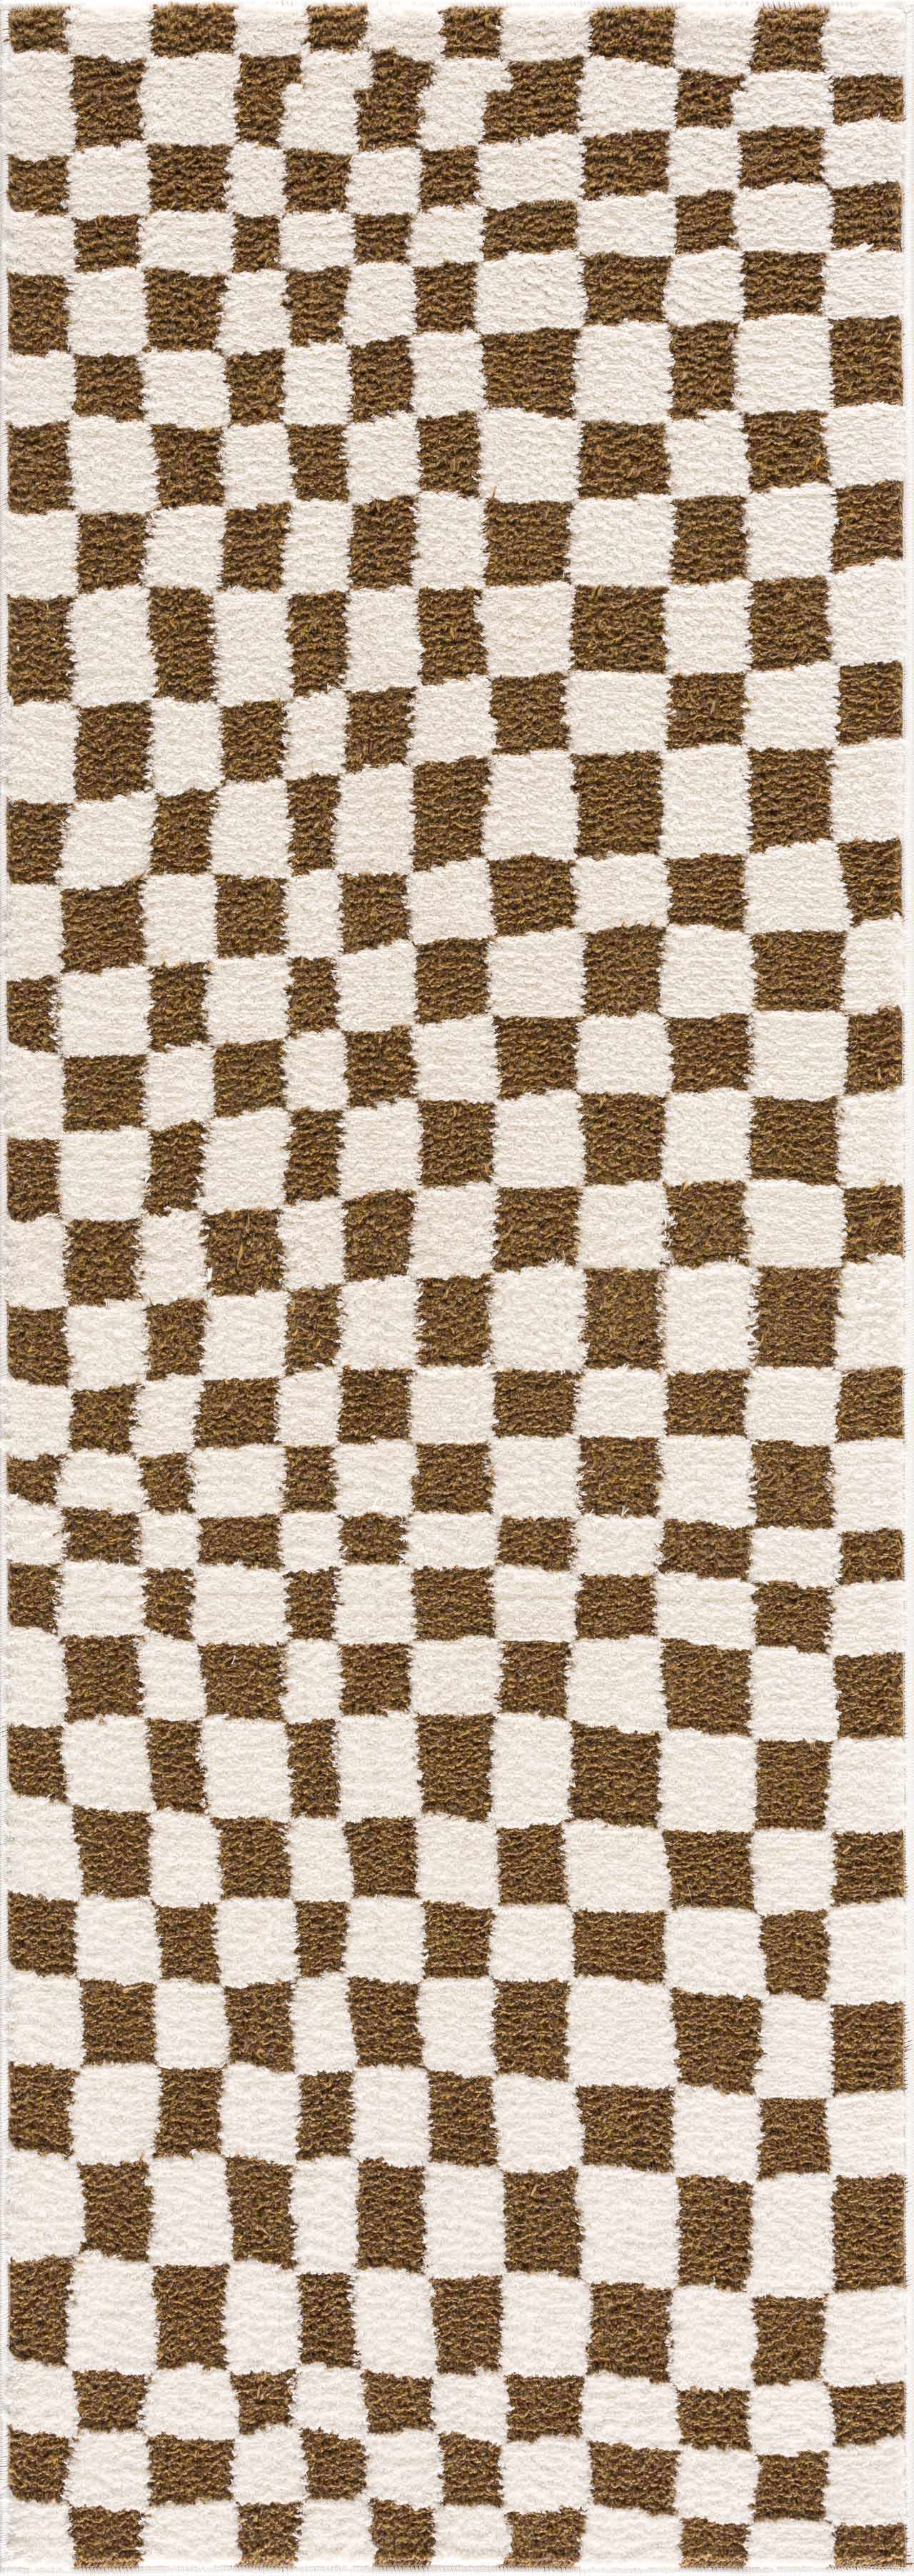 Lajos Brown Checkered Area Rug.